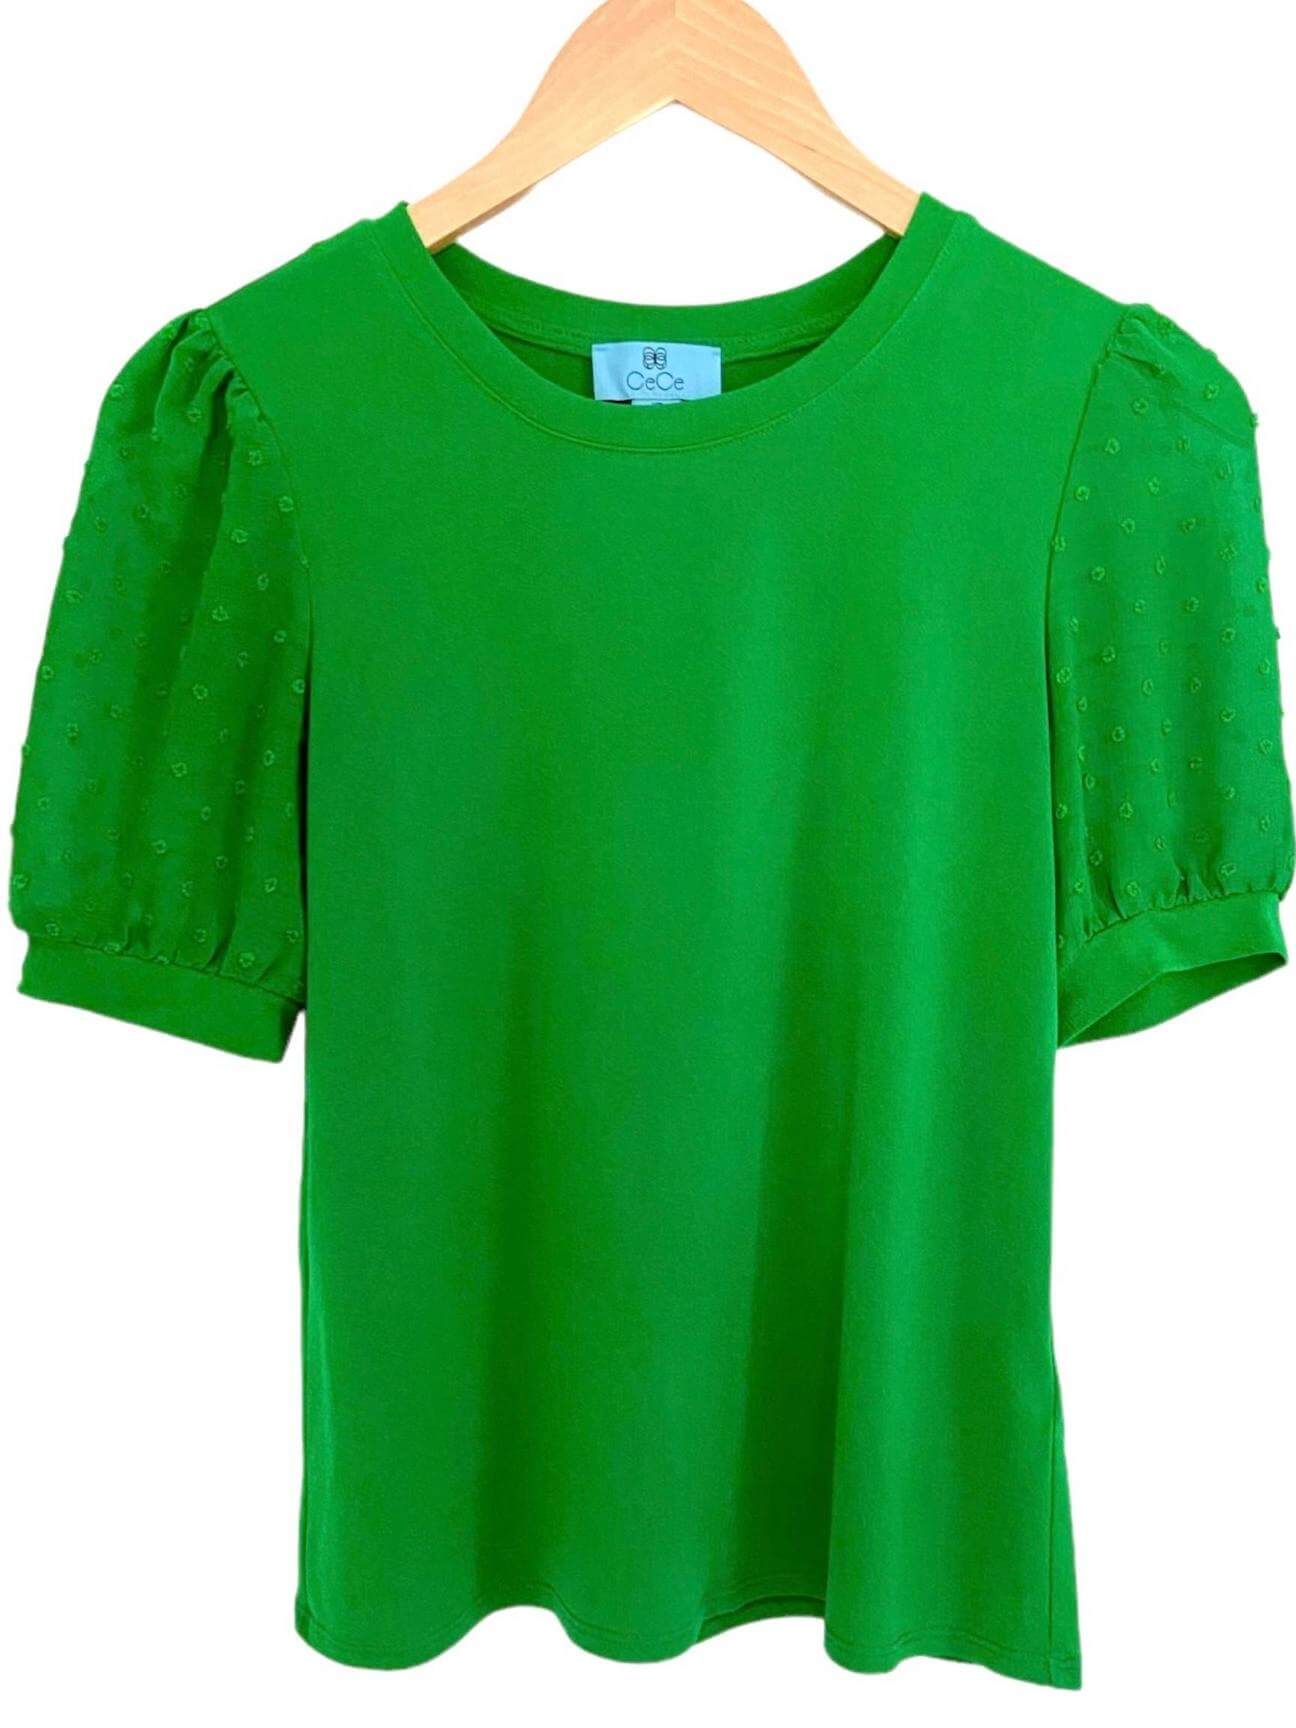 Bight Spring CECE green dot sleeve top